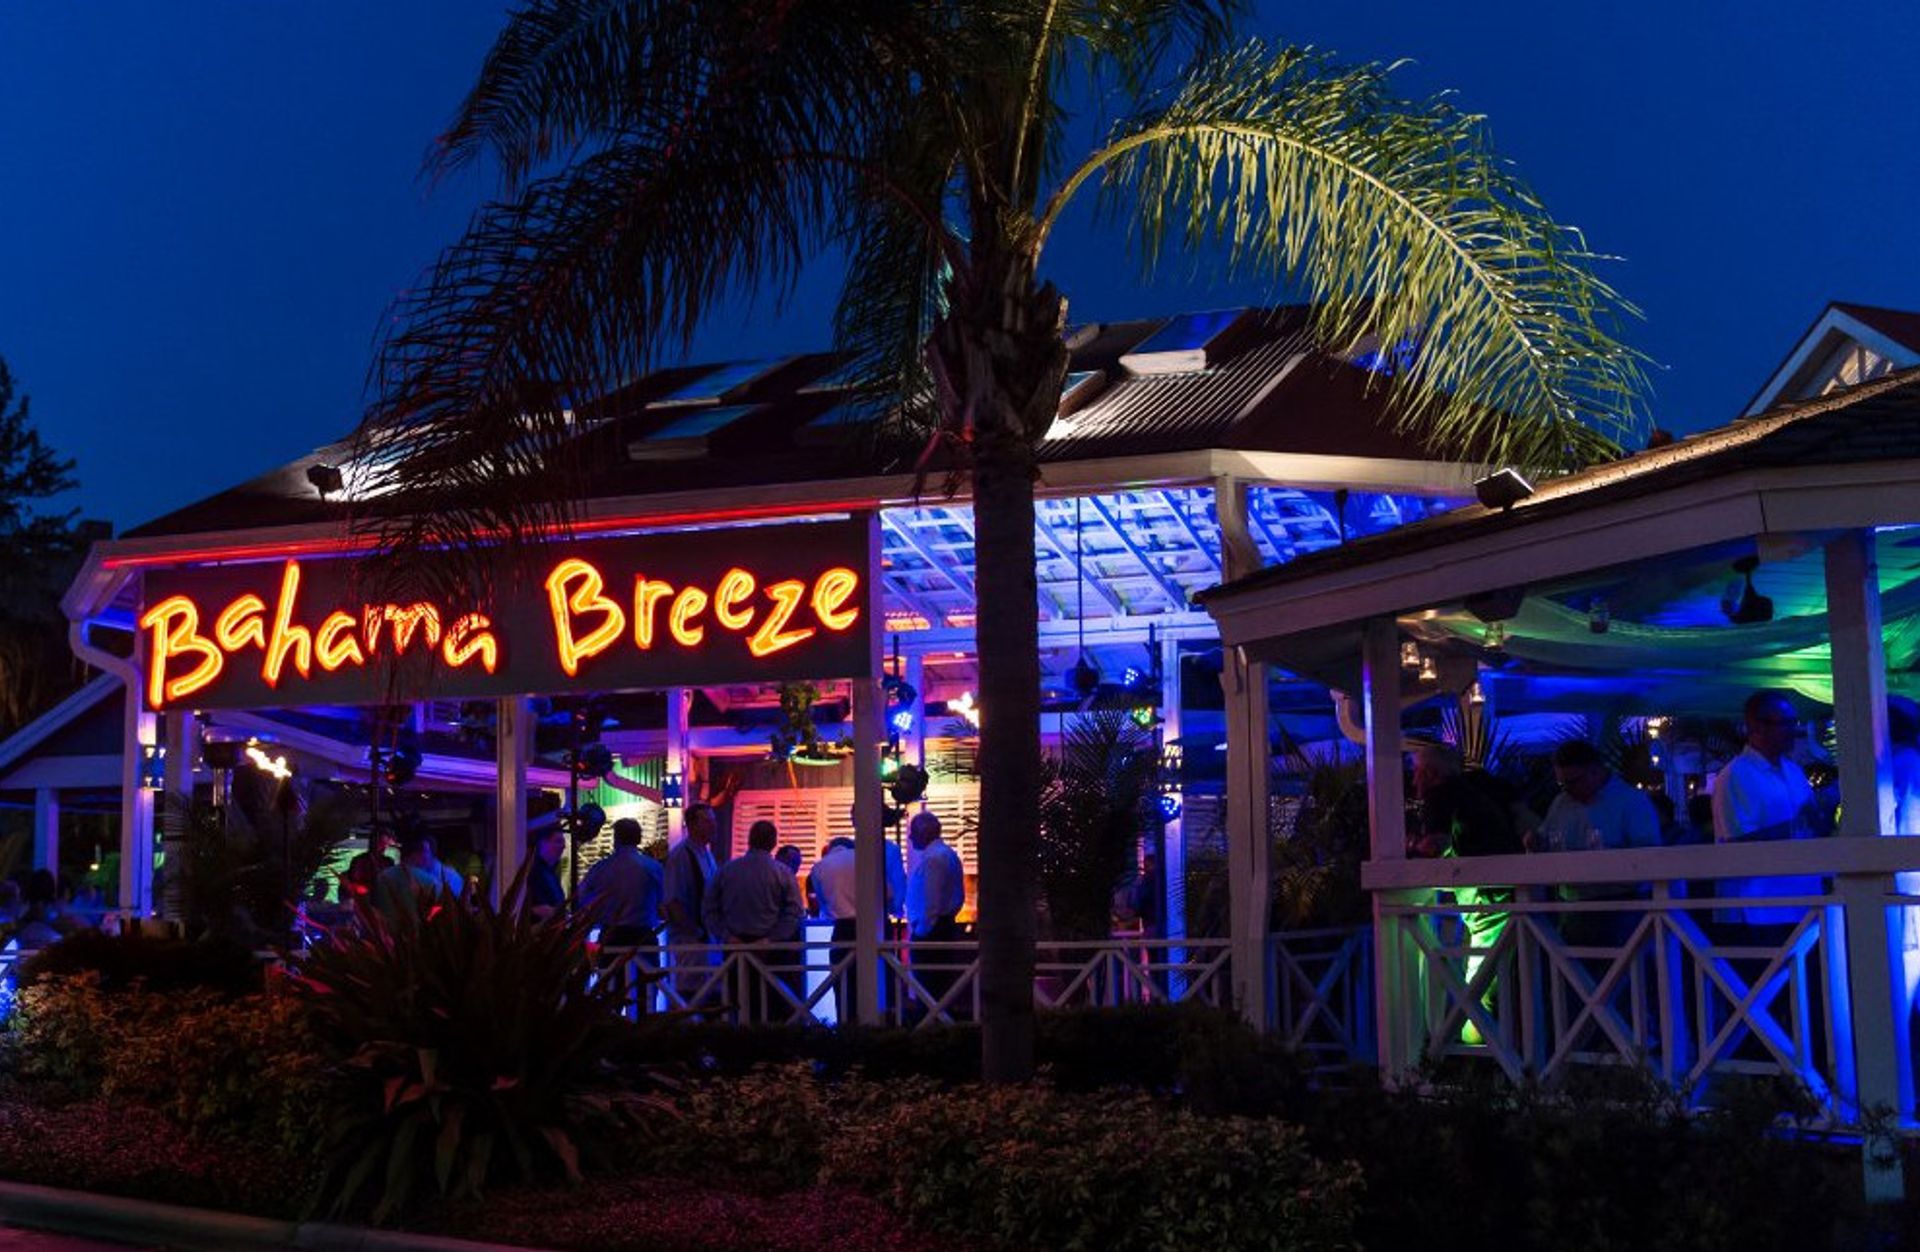 Orlando Dining - Top Restaurants on I-Drive - International Drive